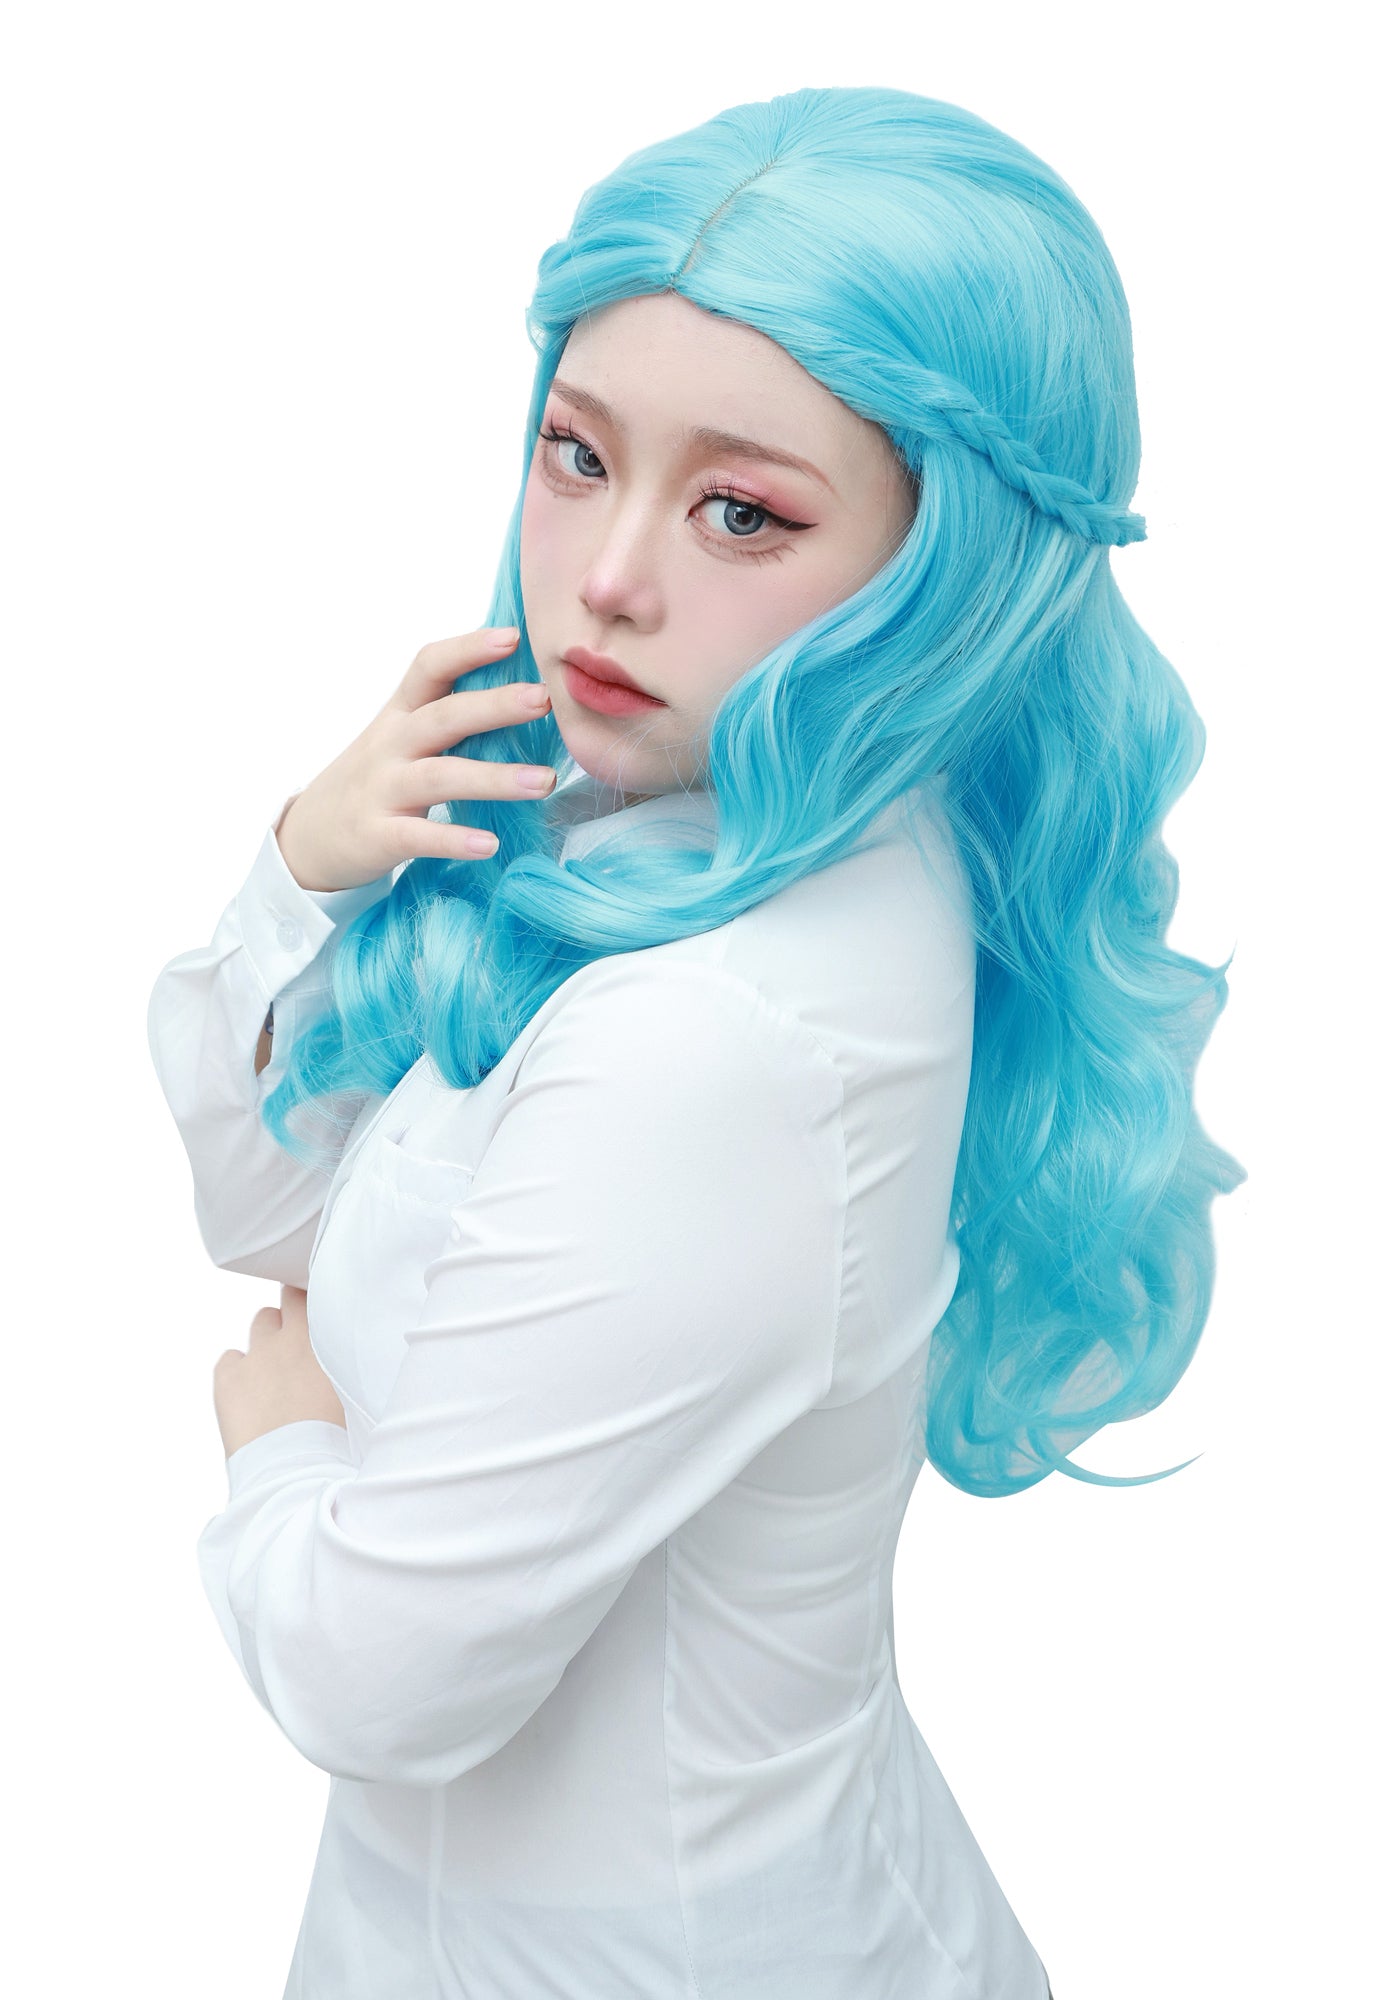 DAZCOS Blue Long Wavy Wig Braid Curly Wave Wig for Adults Kid Halloween Cosplay Costume